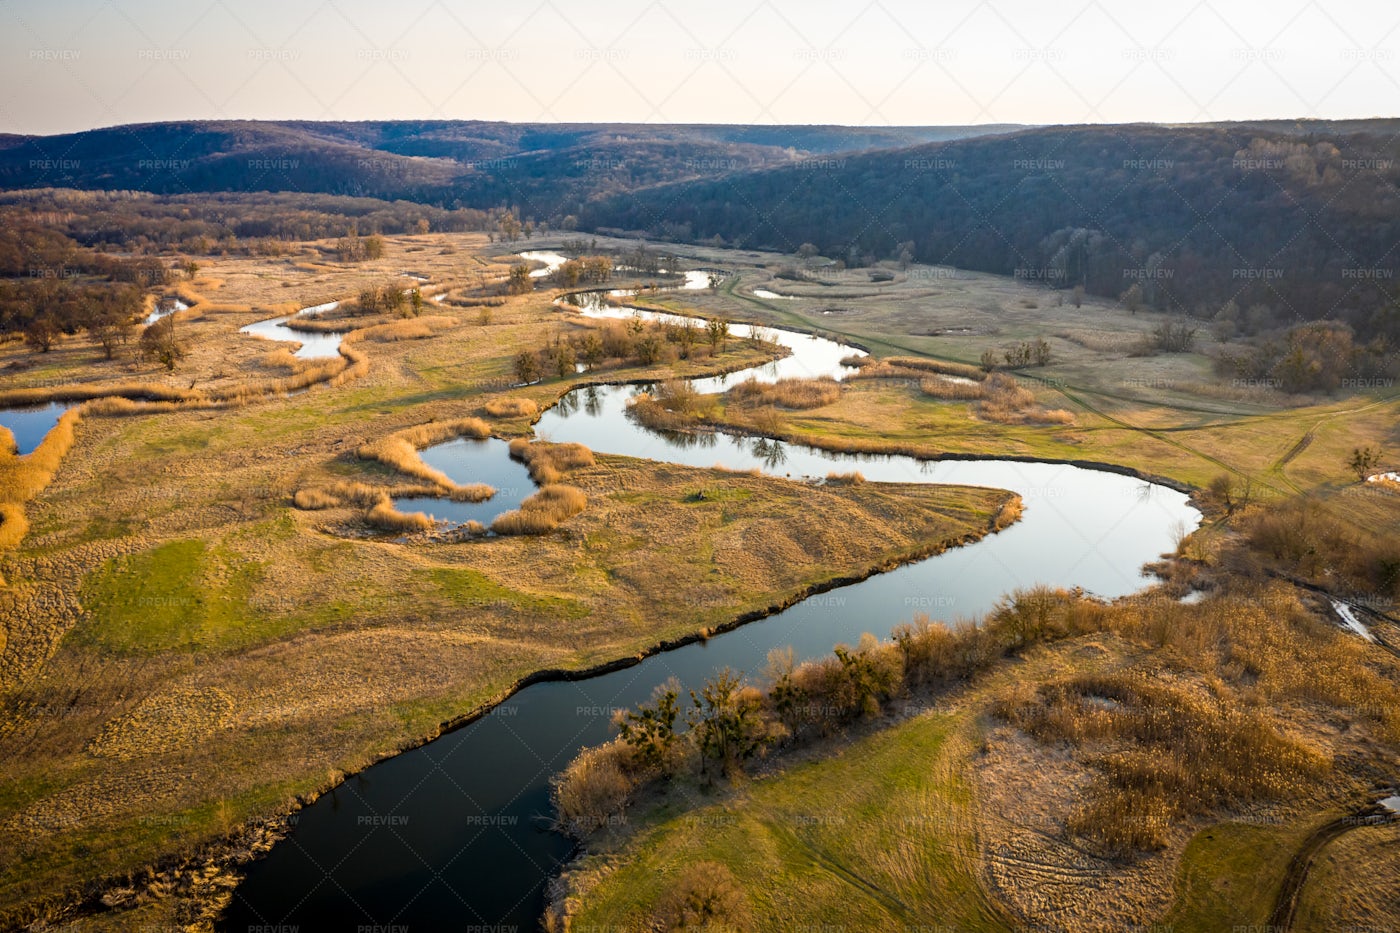 Spring Valley With A River: Stock Photos